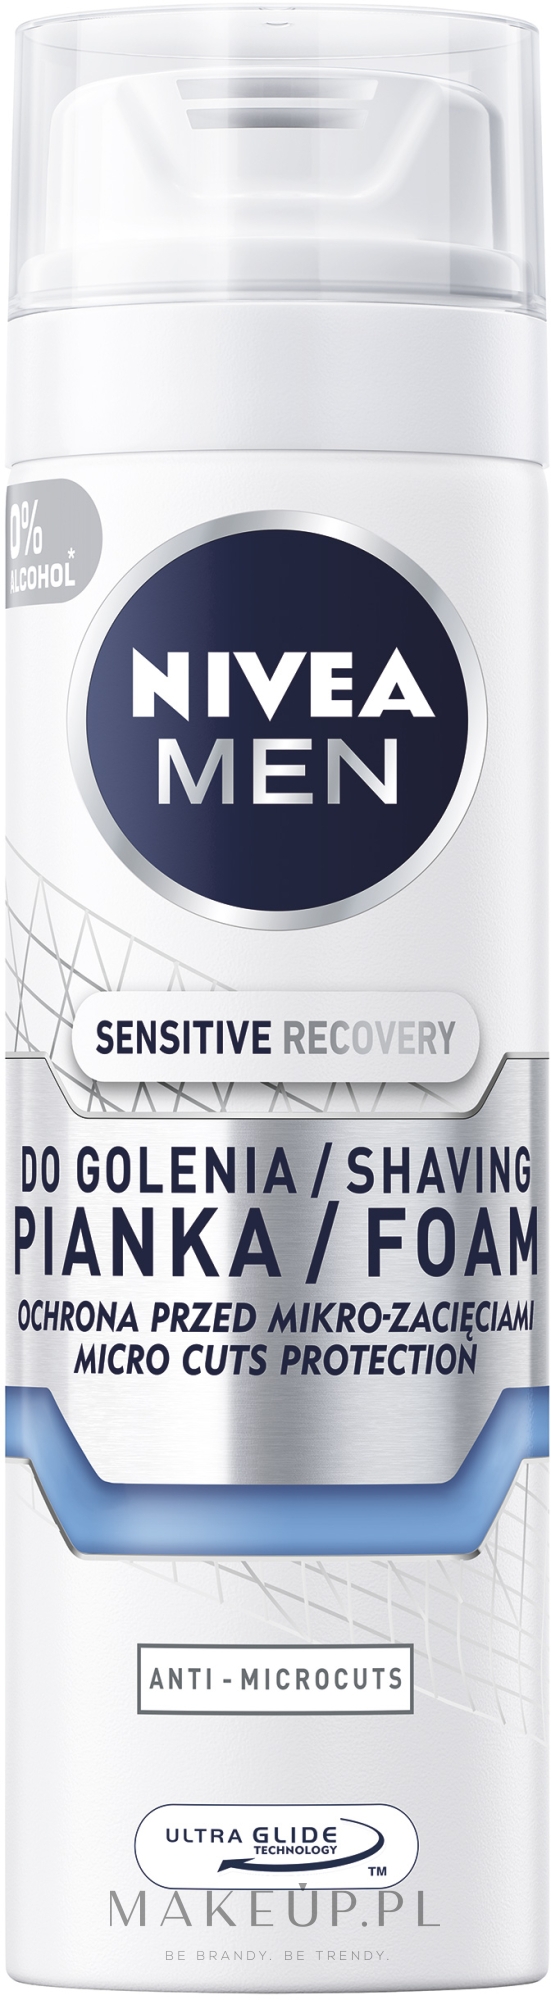 Regenerująca pianka do golenia - NIVEA MEN Sensitive Recovery Foam — Zdjęcie 200 ml